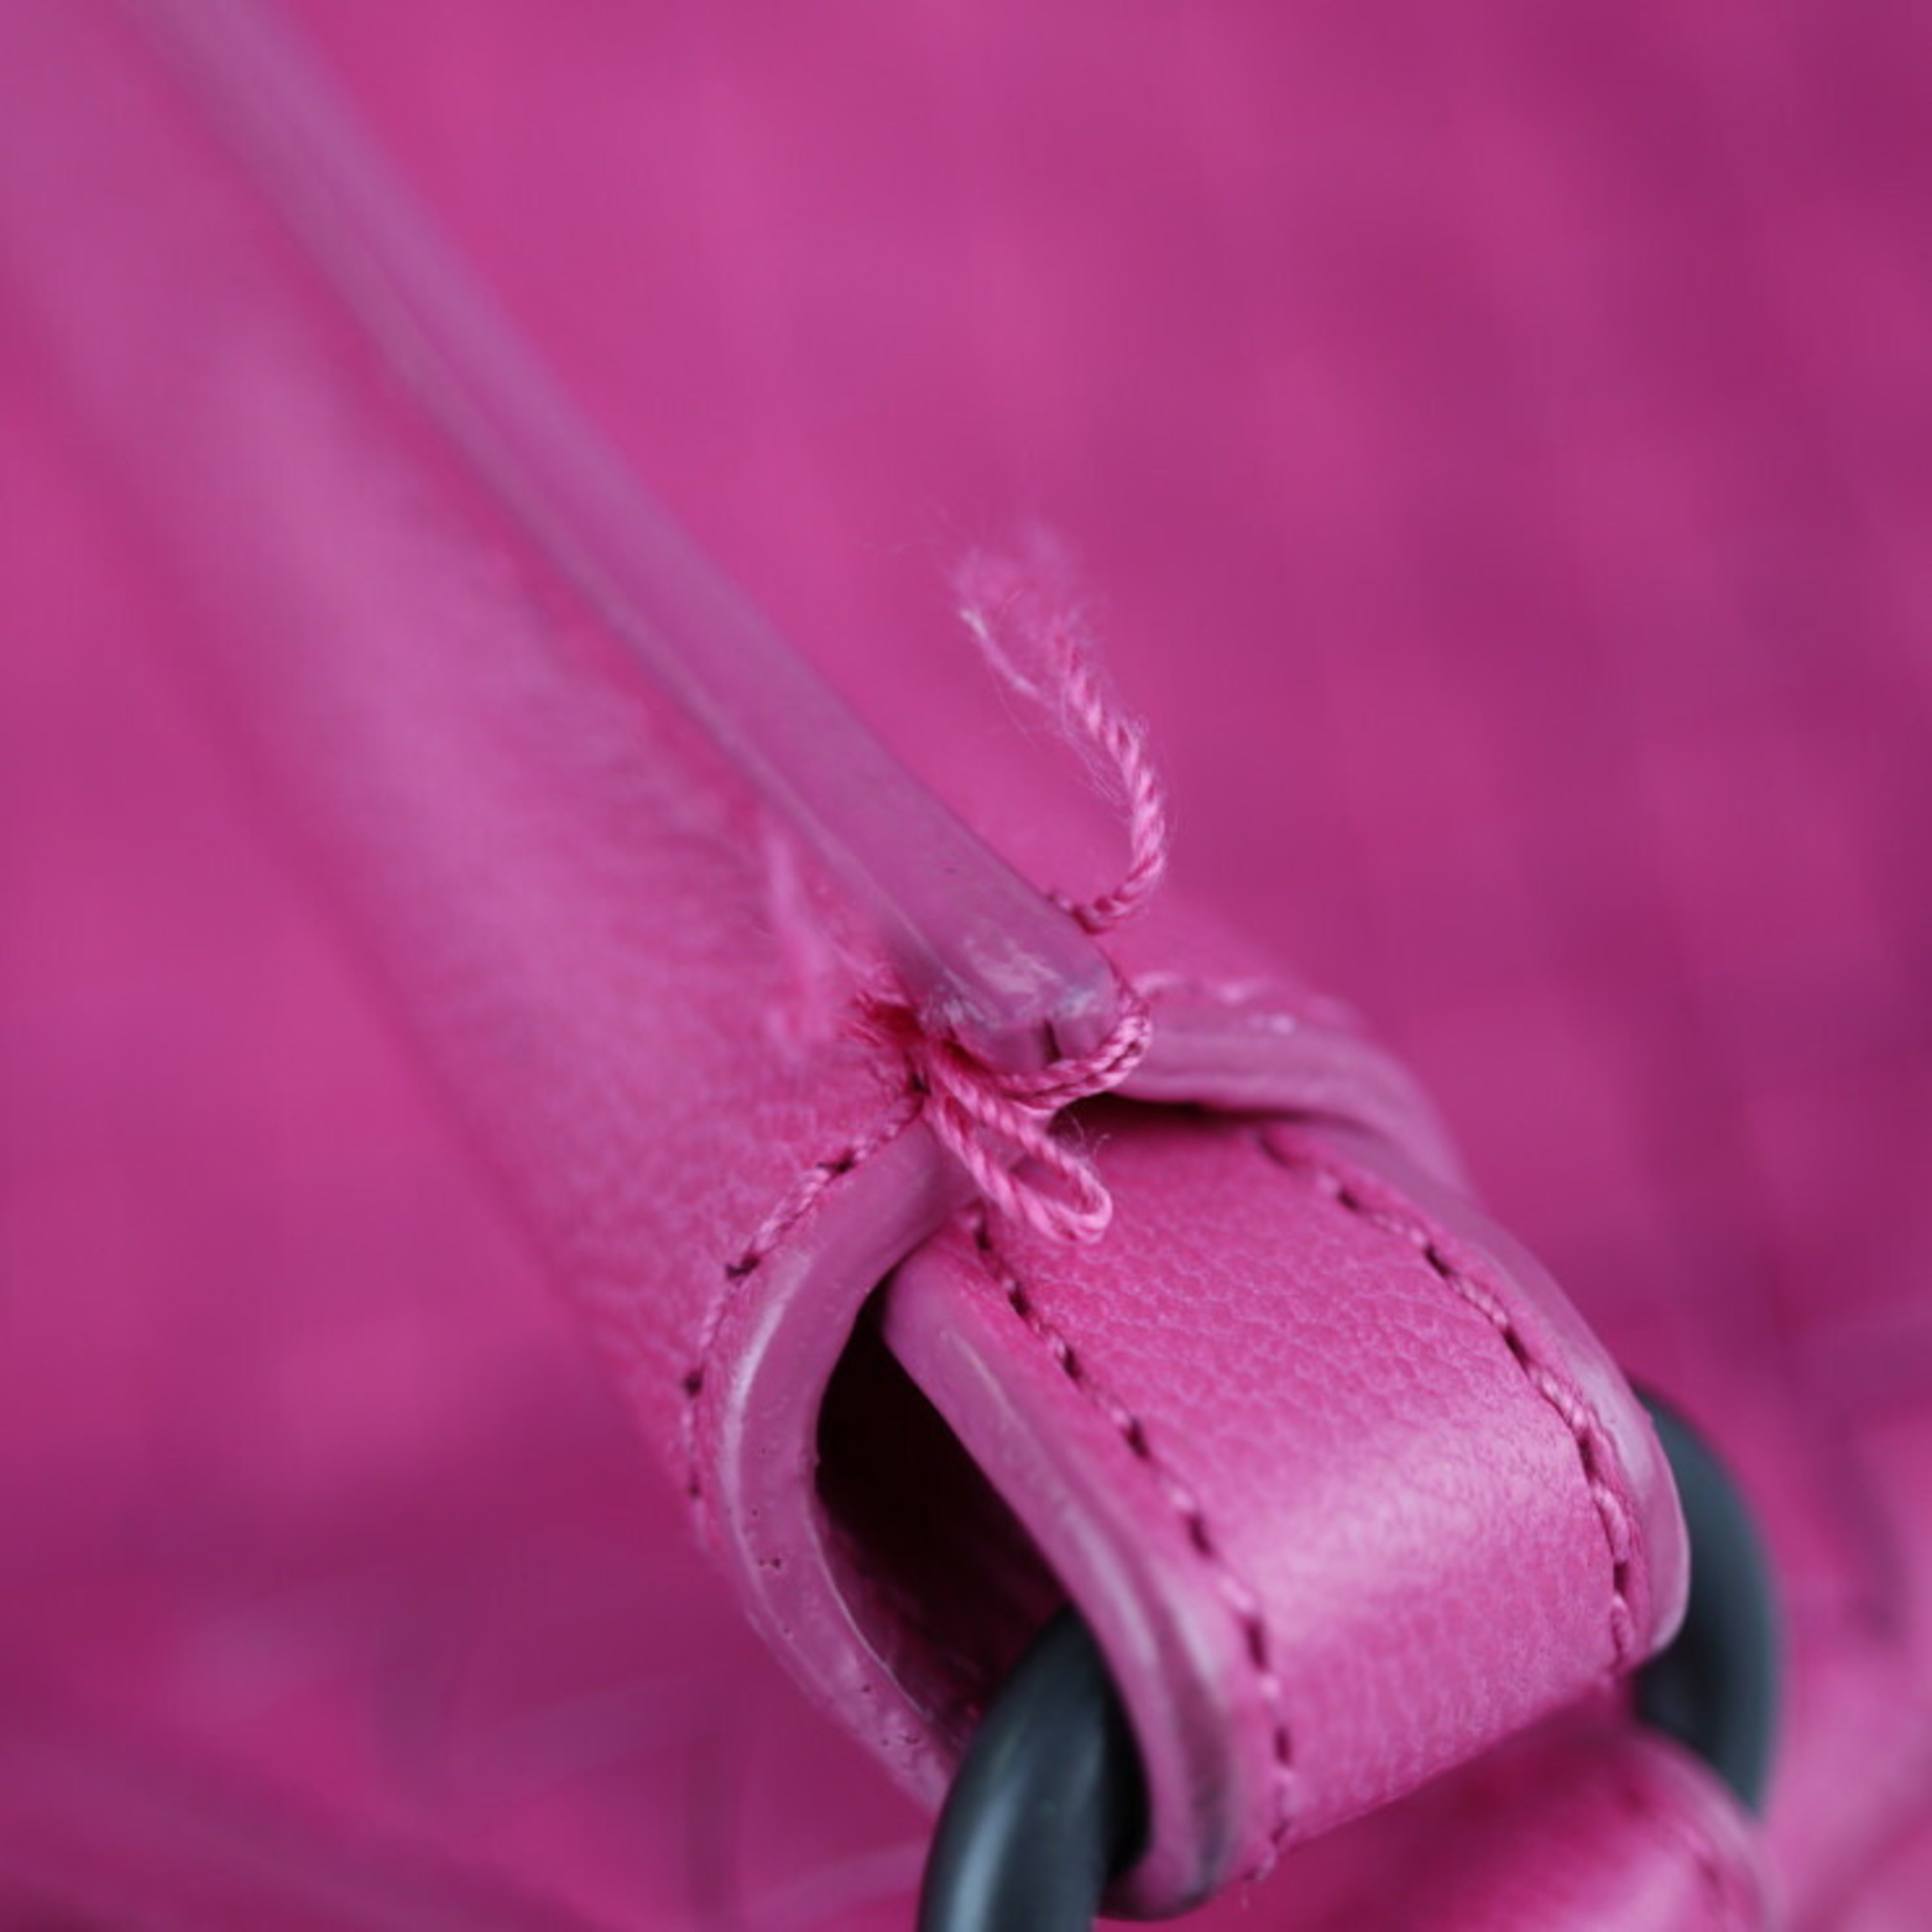 BOTTEGA VENETA Bottega Veneta convertible bag intrecciato handbag 354216 leather pink 2WAY semi-shoulder tote